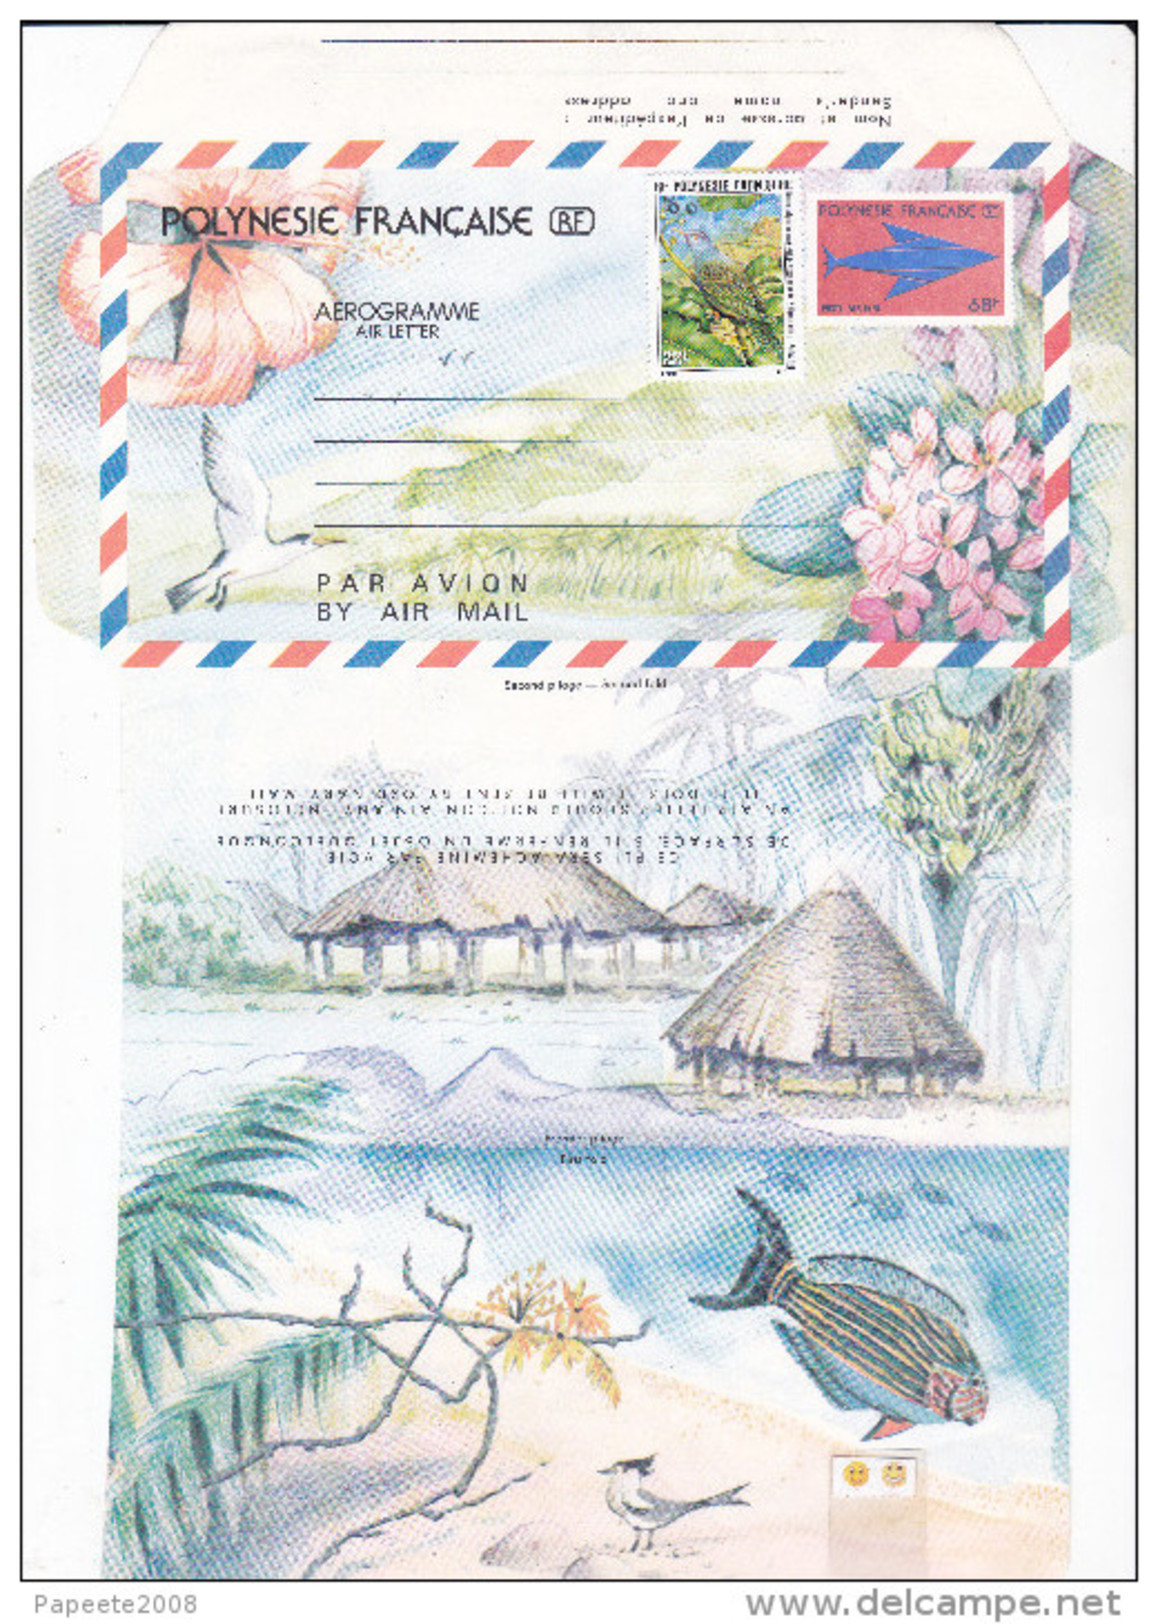 Polynesie Française / Tahiti - Aérogramme à 68 F CFP - 1988 - Neuf / Surchargé à 100 F - Aerogramme